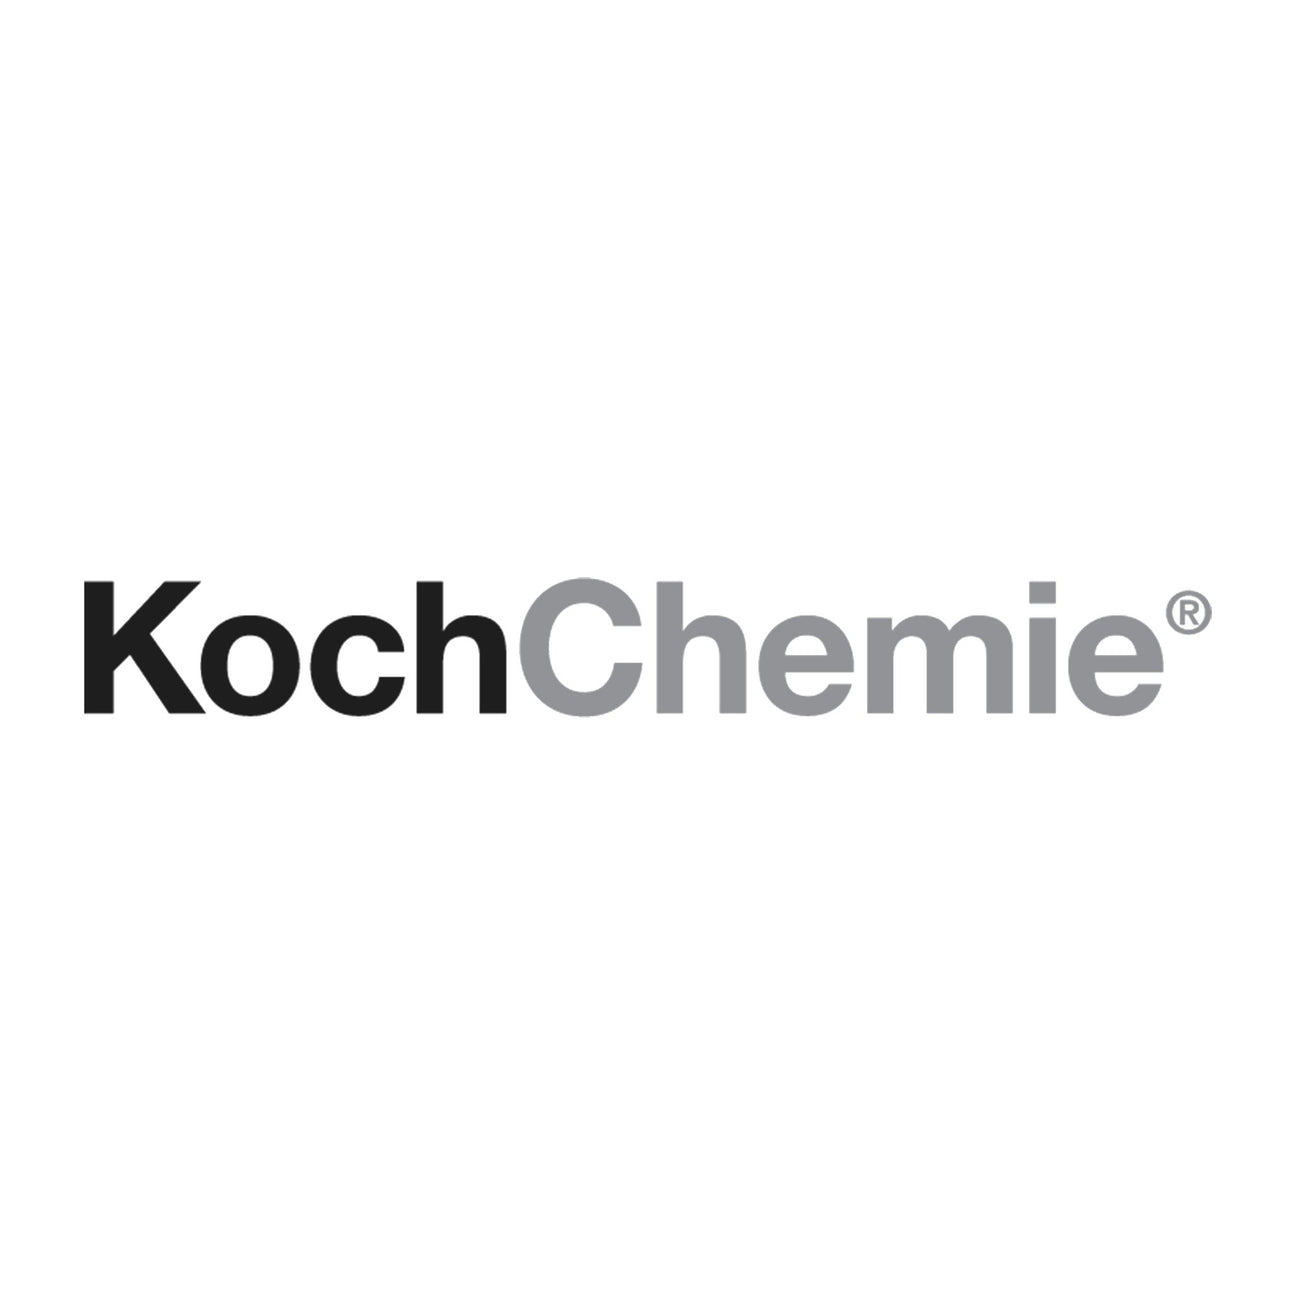 Koch Chemie Online Shop